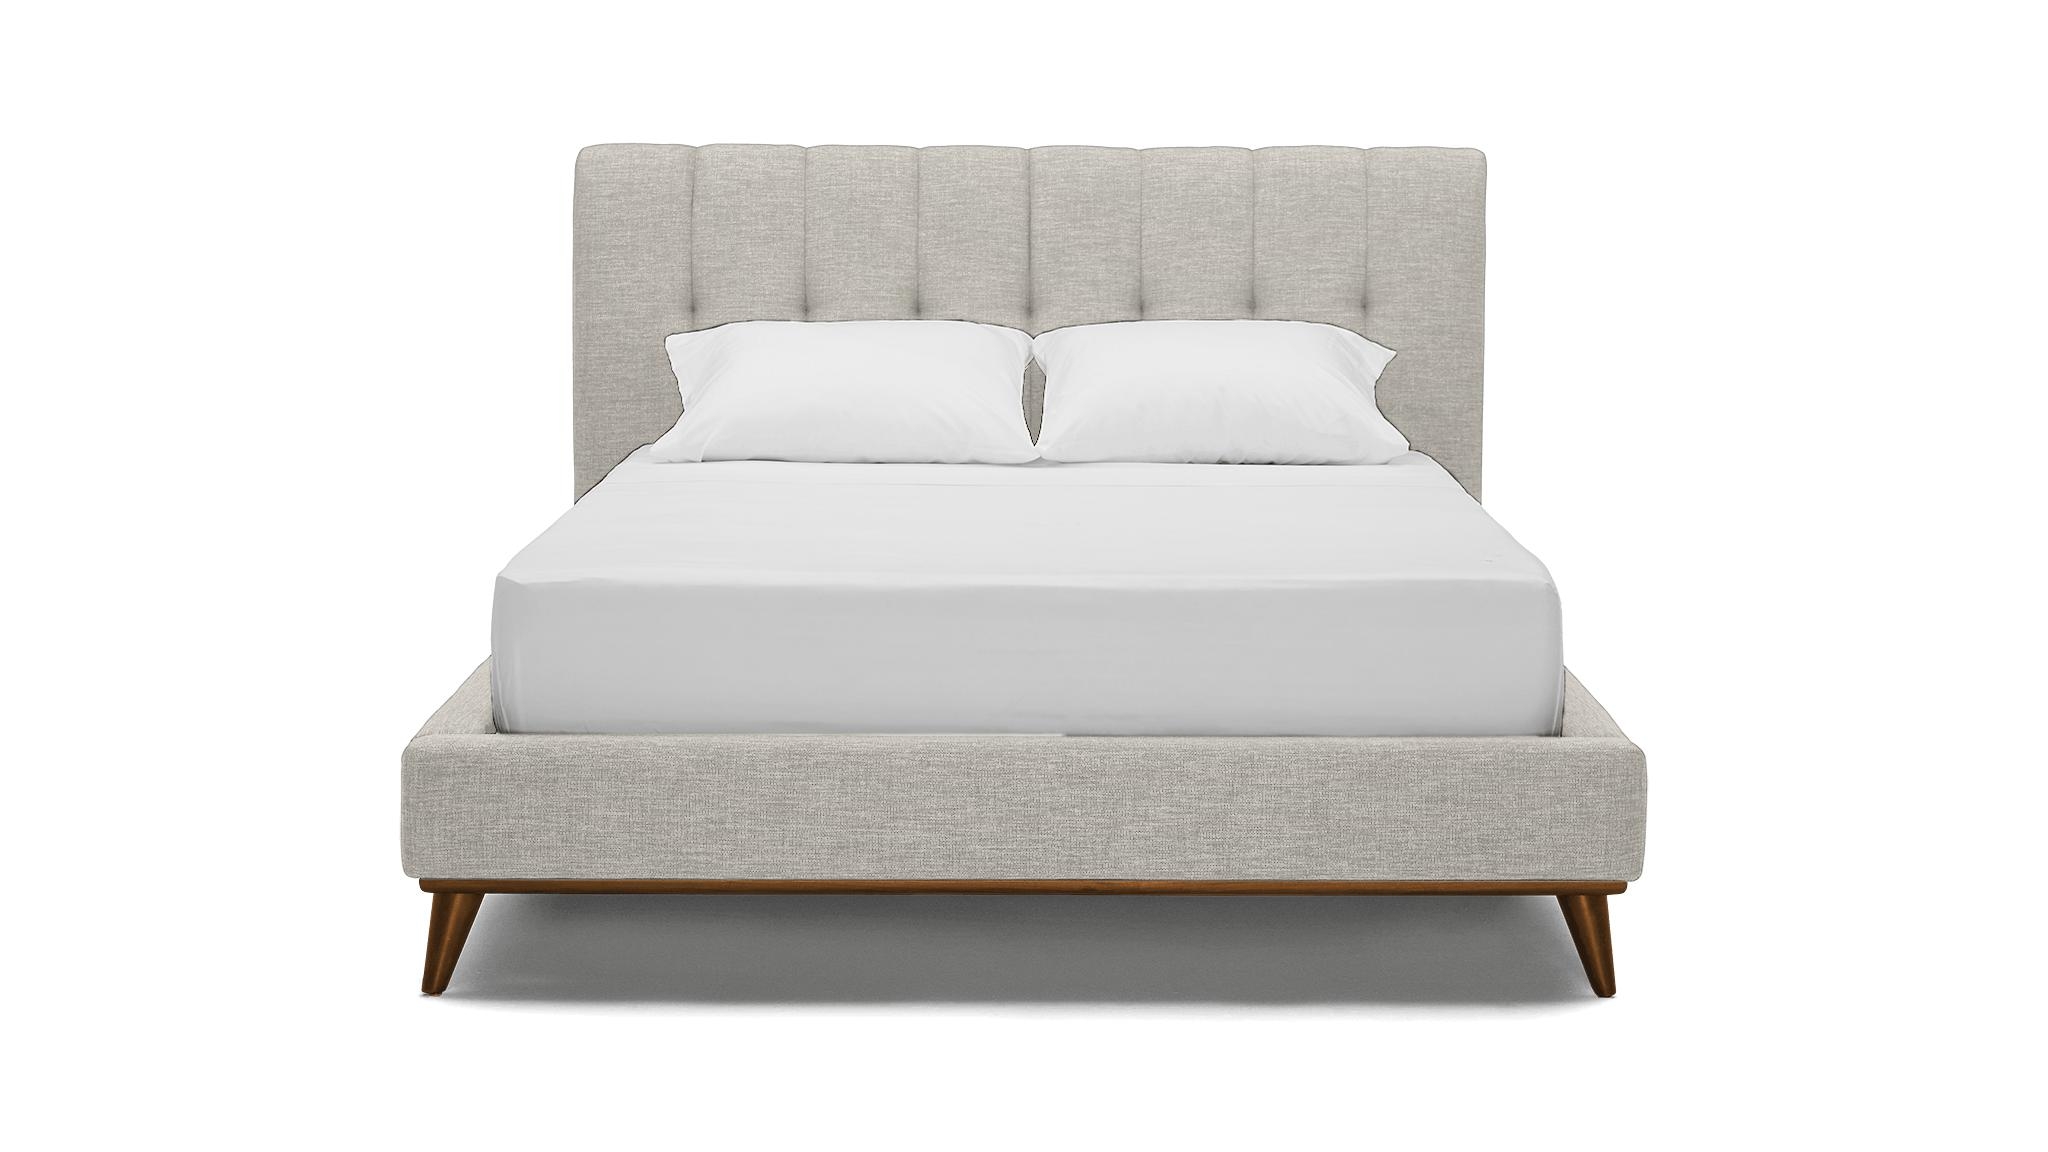 Gray Hughes Mid Century Modern Bed - Bloke Cotton - Mocha - Eastern King - Image 0